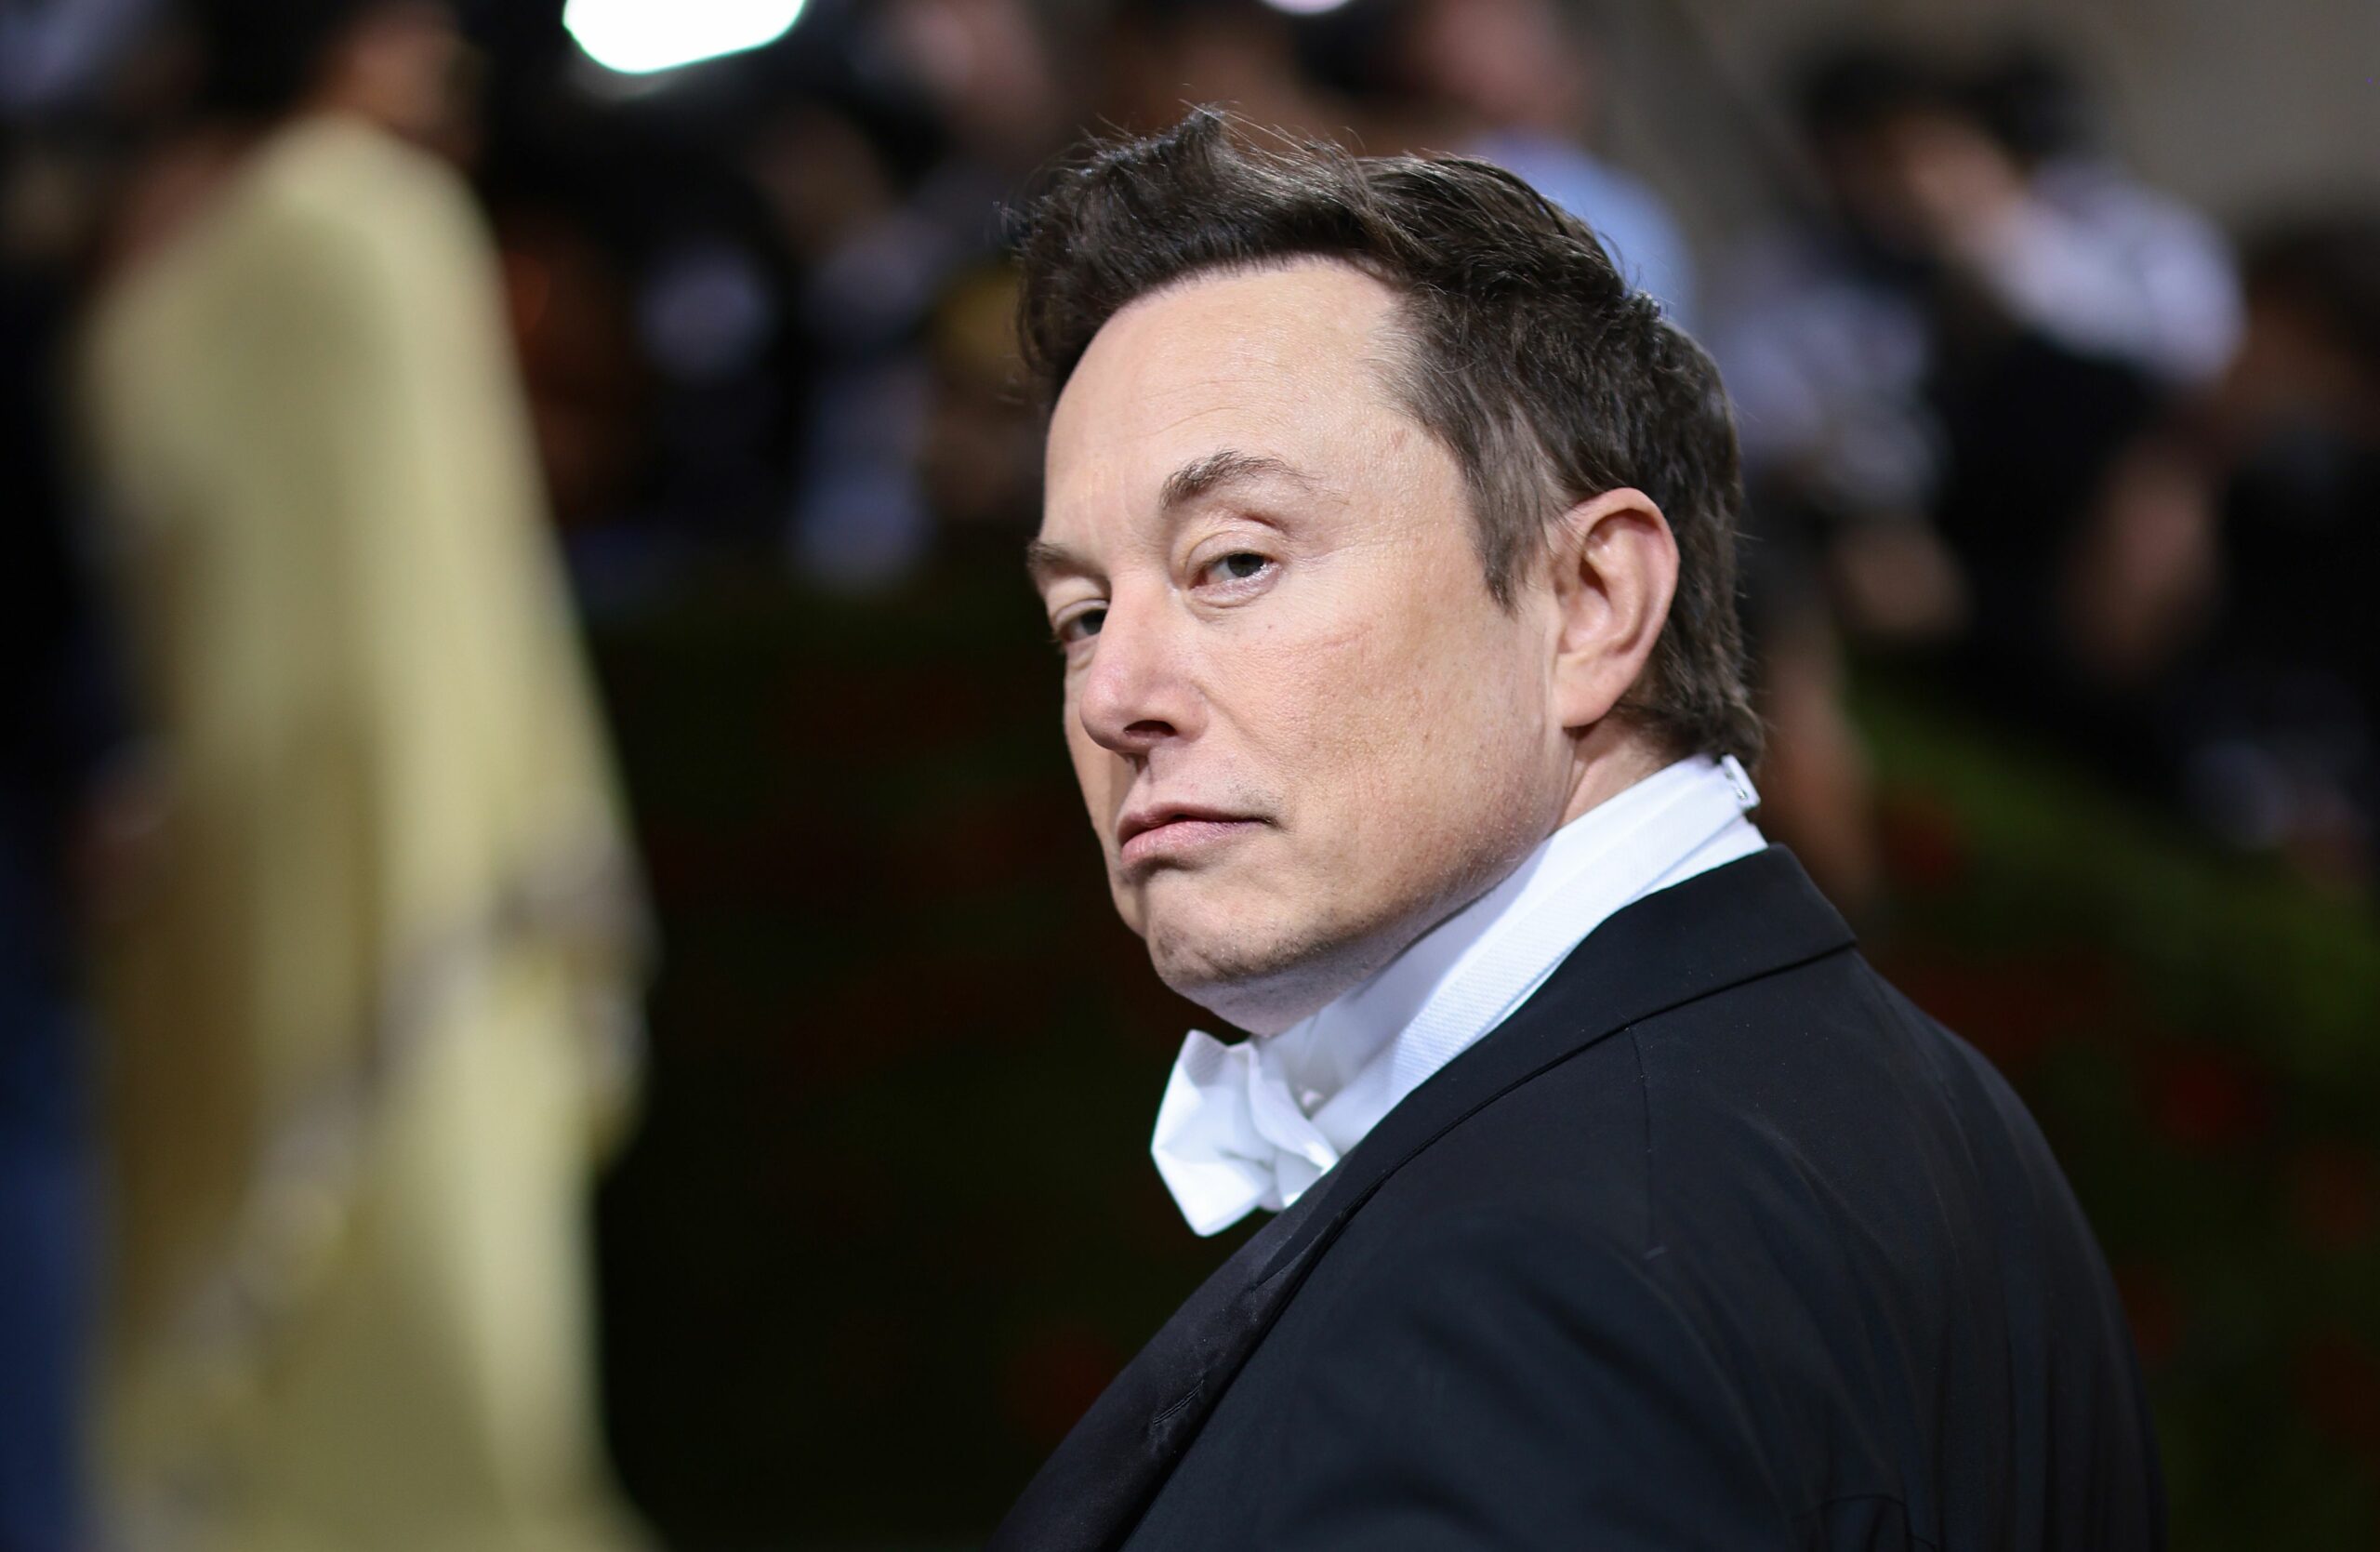 Bagikan Jajak Pendapat, Netizen Memilih Pengunduran Diri Elon Musk sebagai CEO Twitter